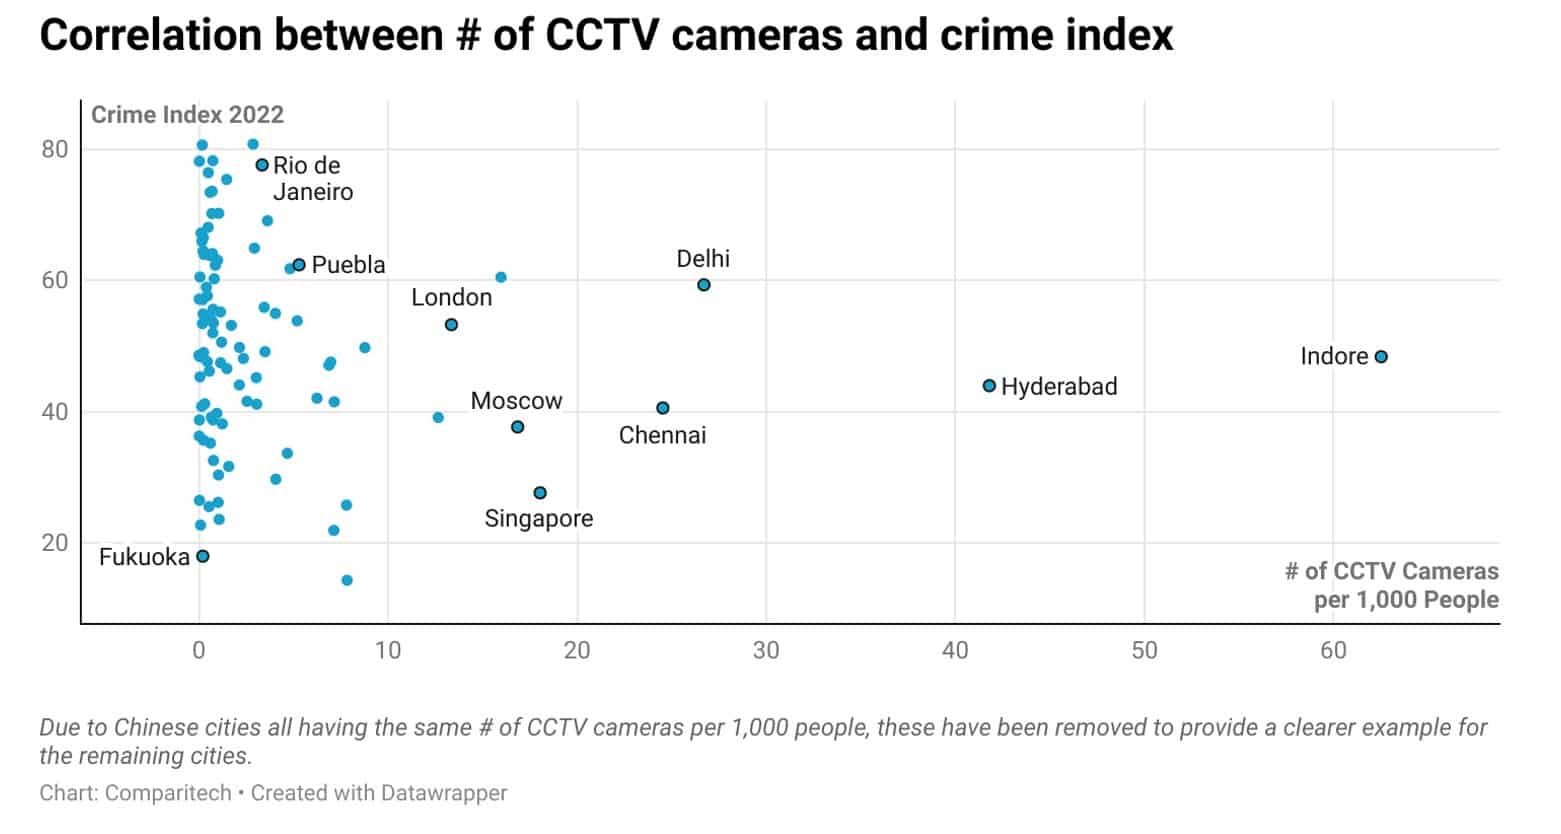 Correlation between # of CCTV cameras and crime index